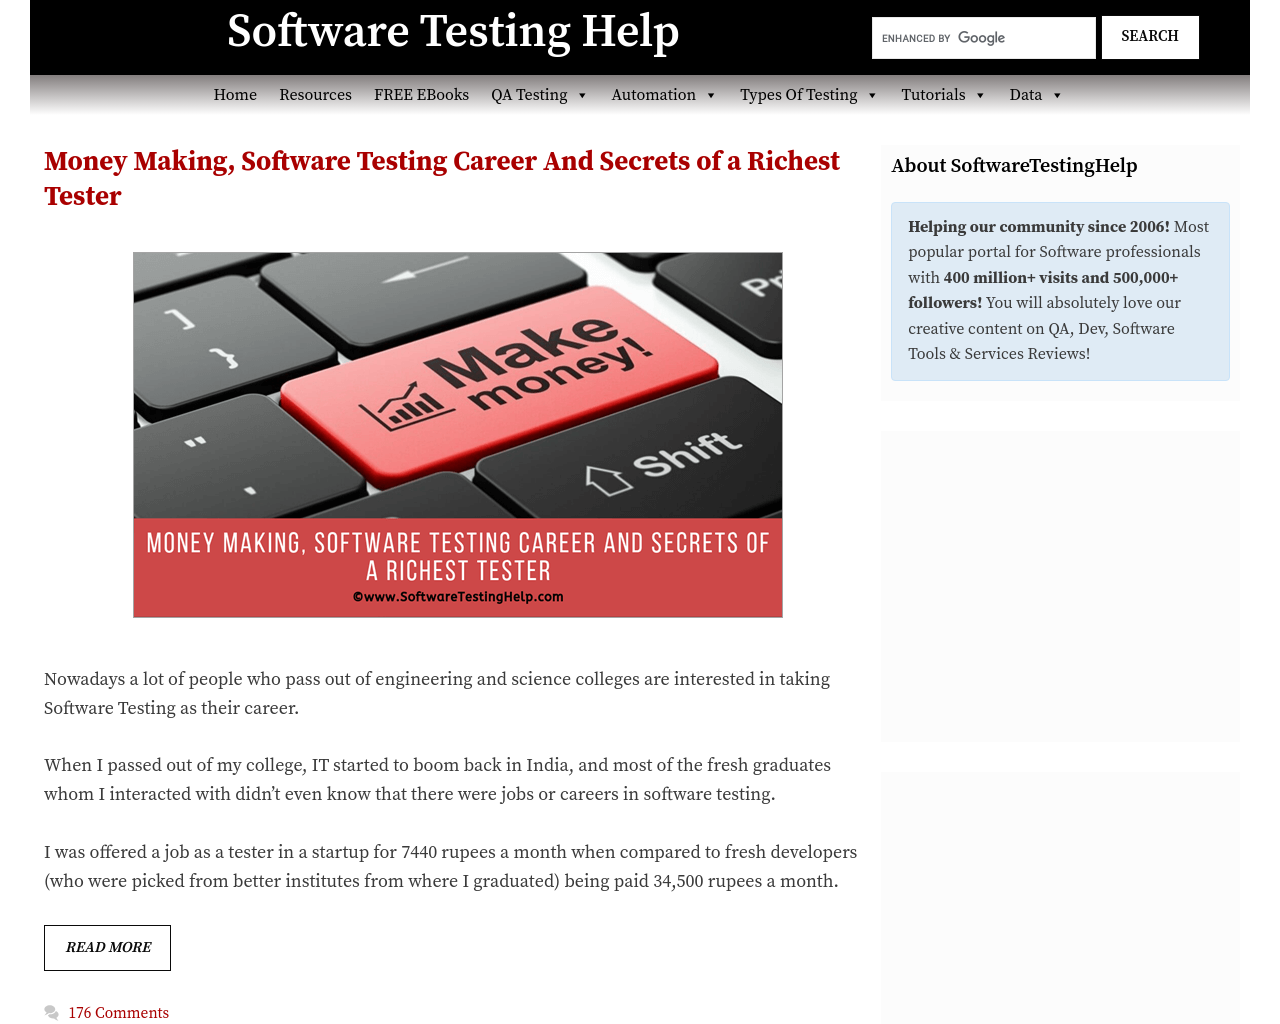 Software Testing Help